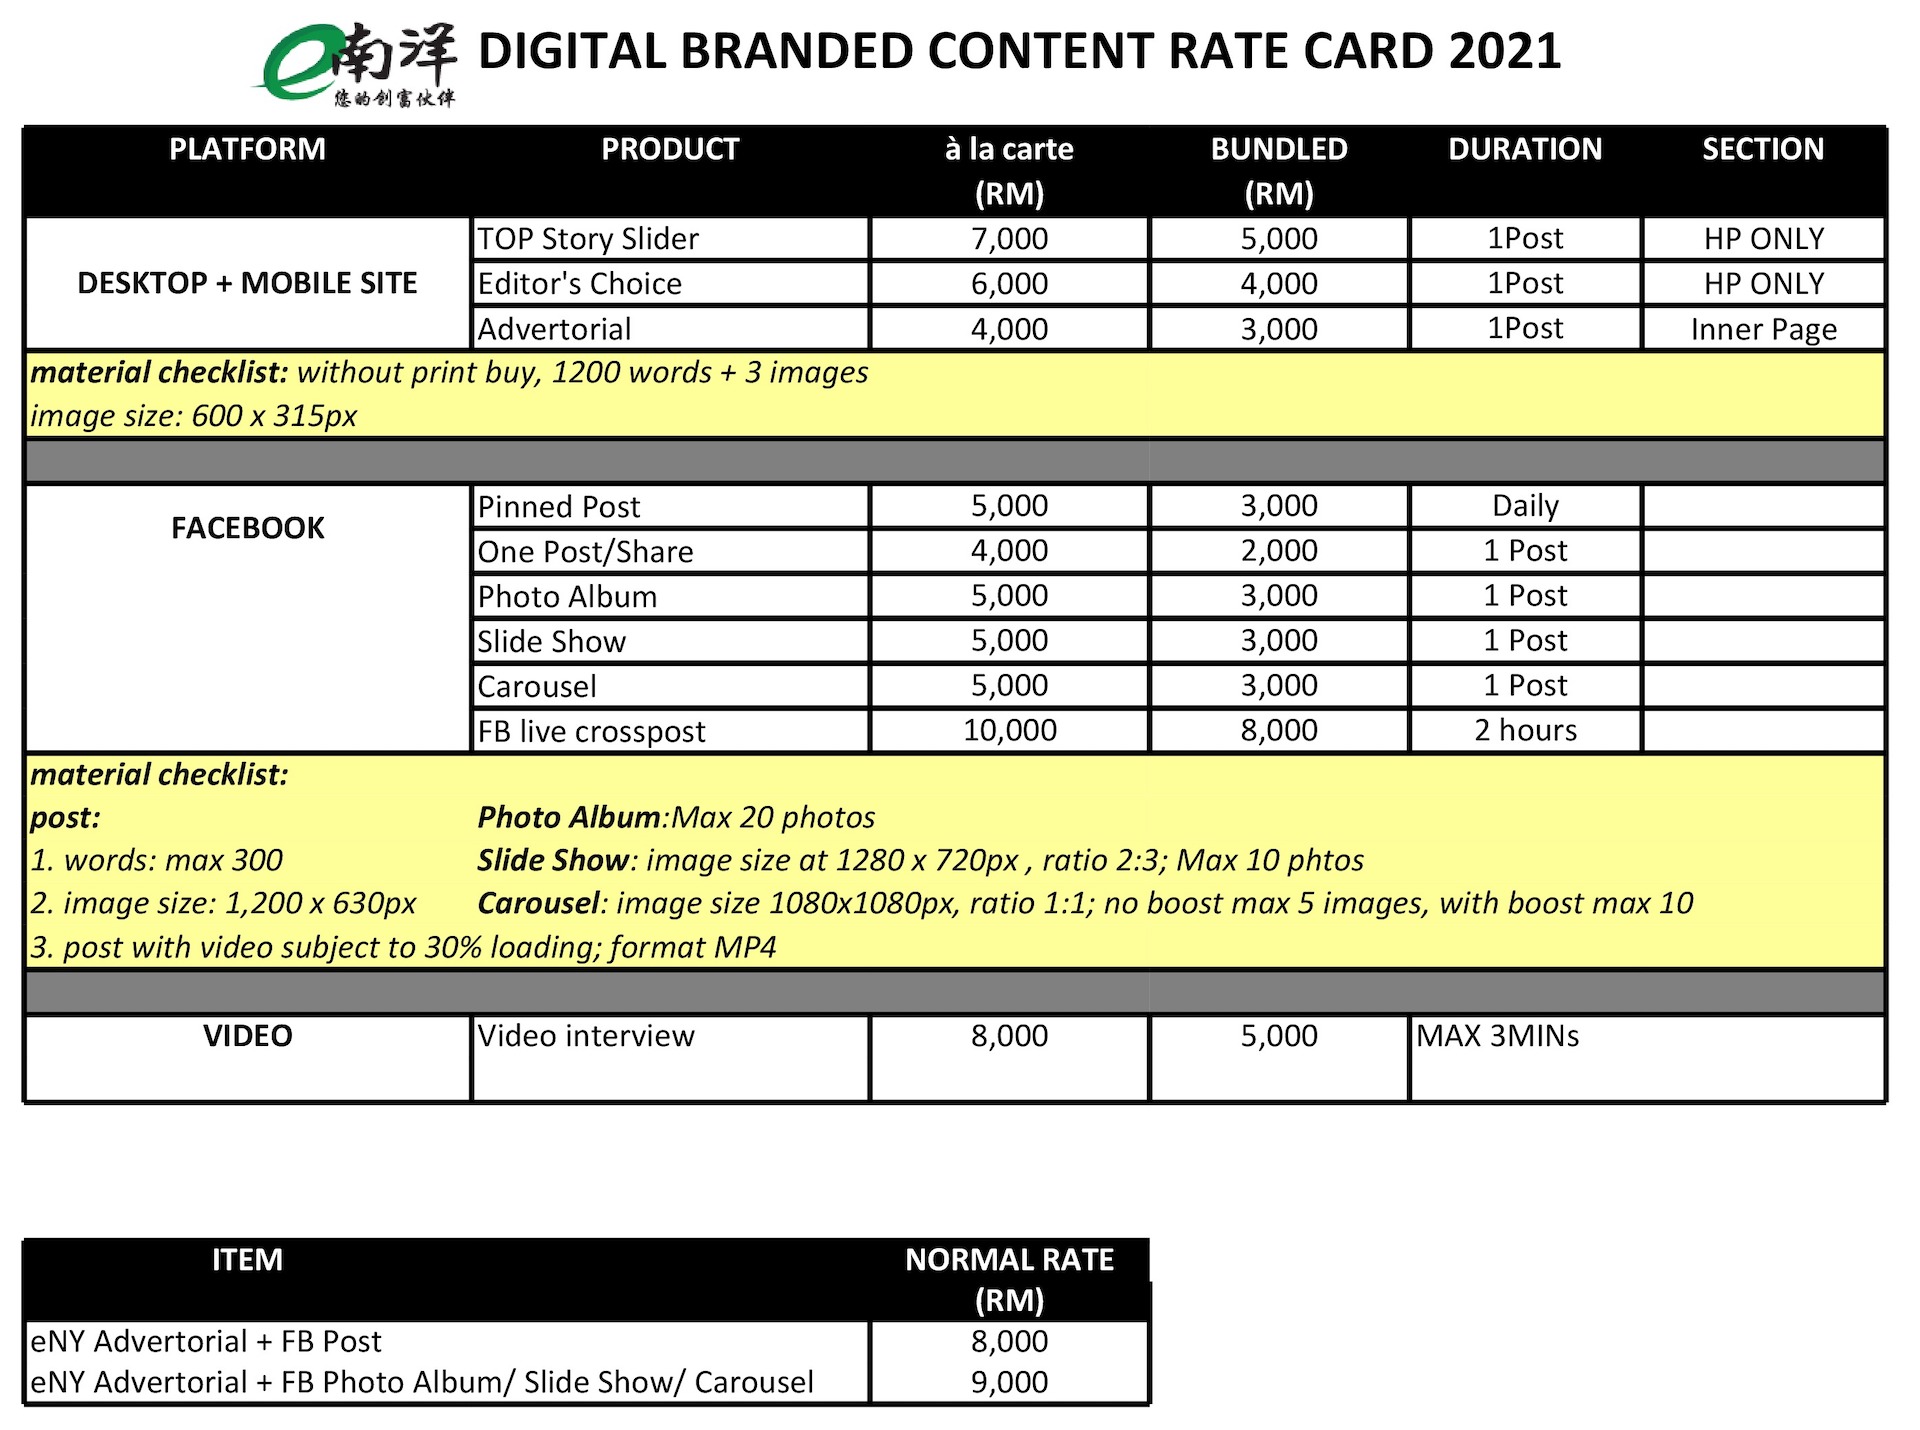 eNanyang Digital Branded Content Rate Card 2021